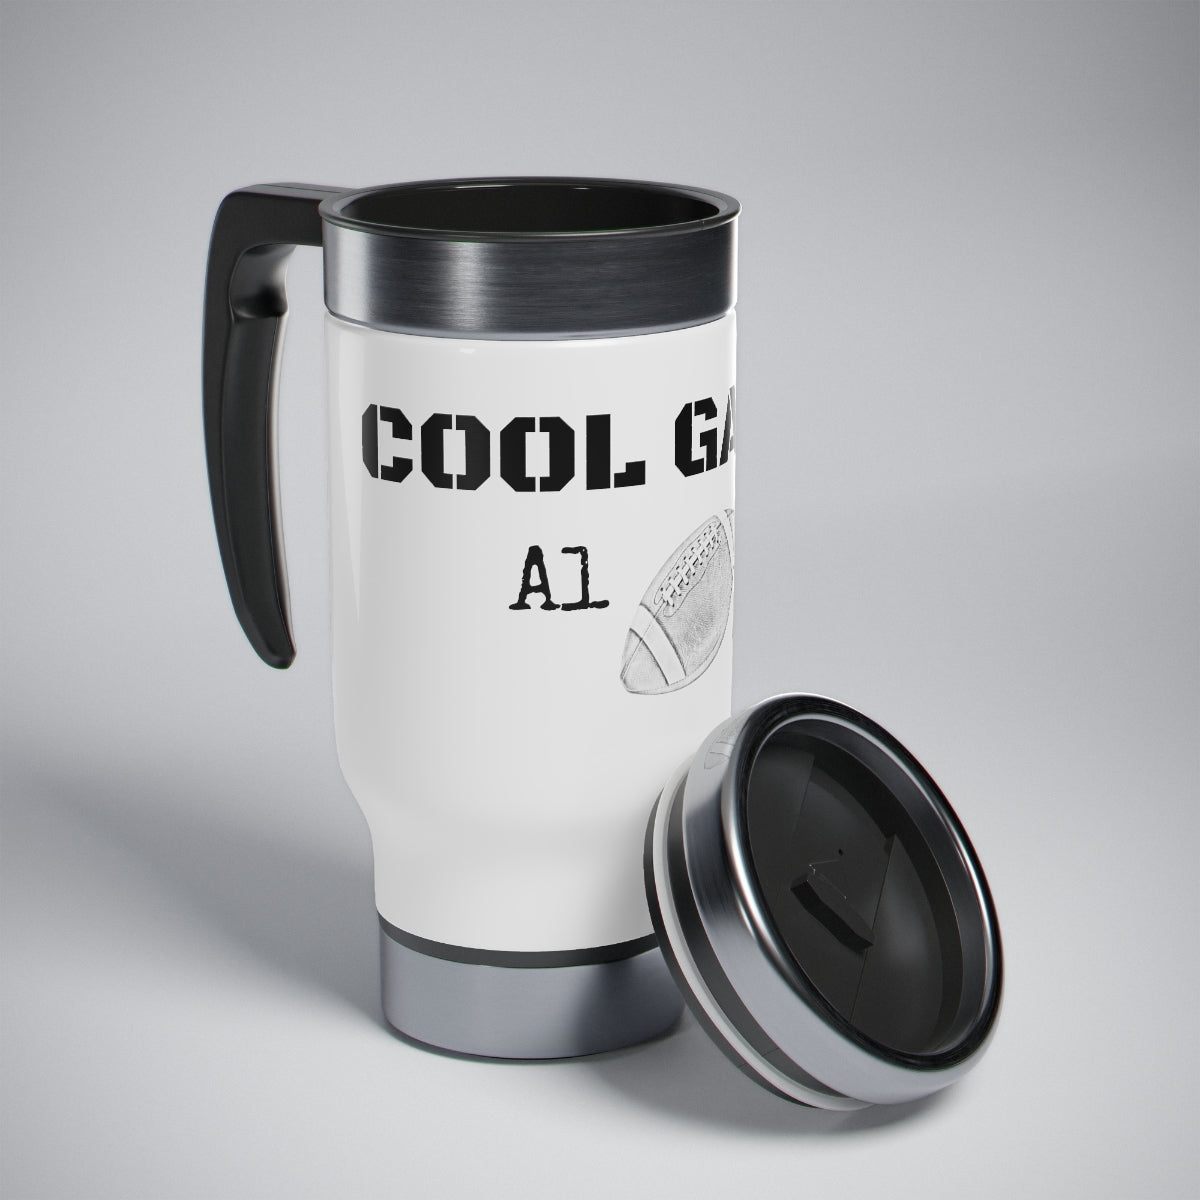 Al & Jerry "Cool Games" Travel Mug